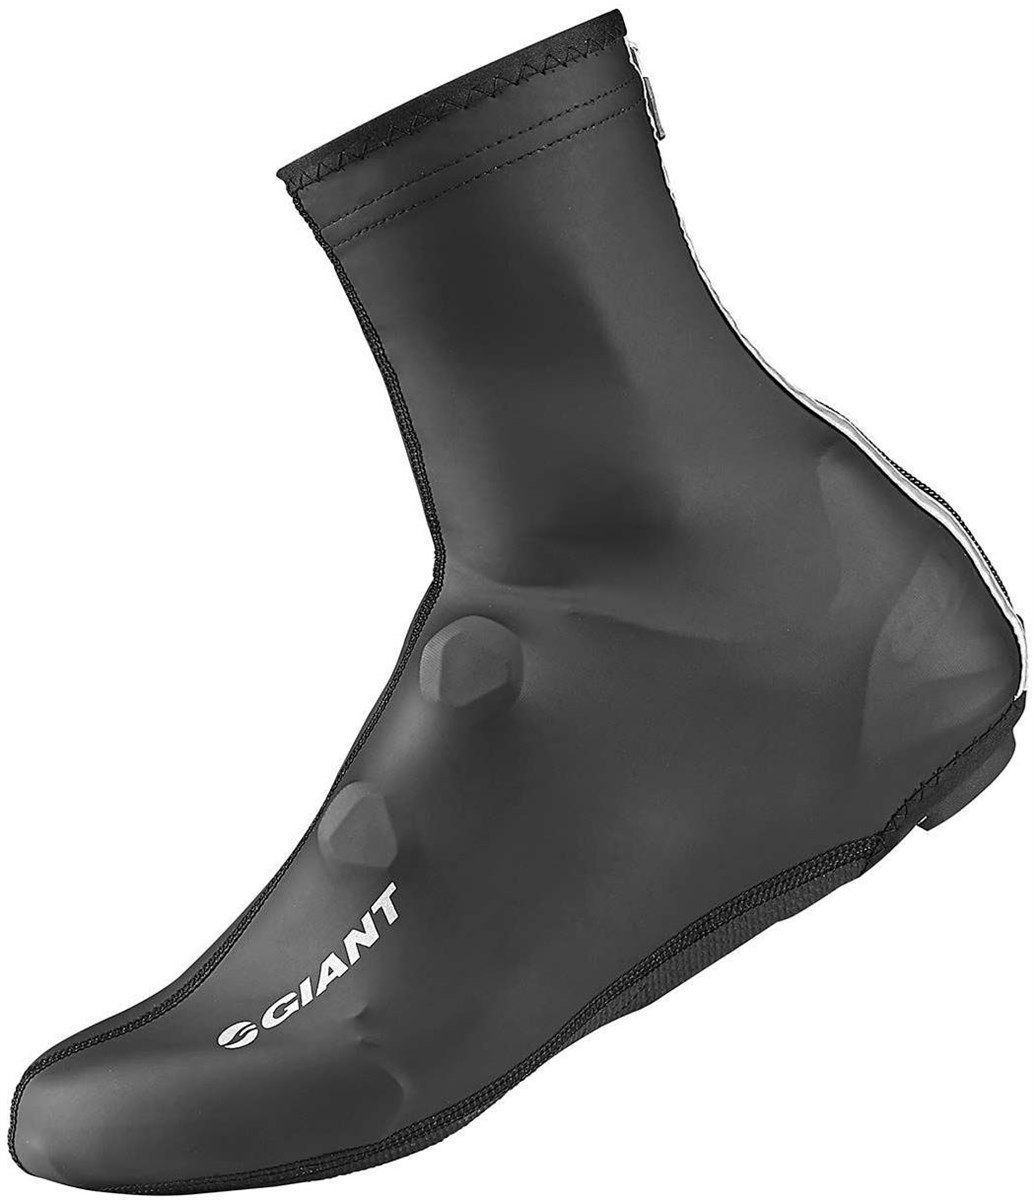 Giant Rain Shoe Covers product image